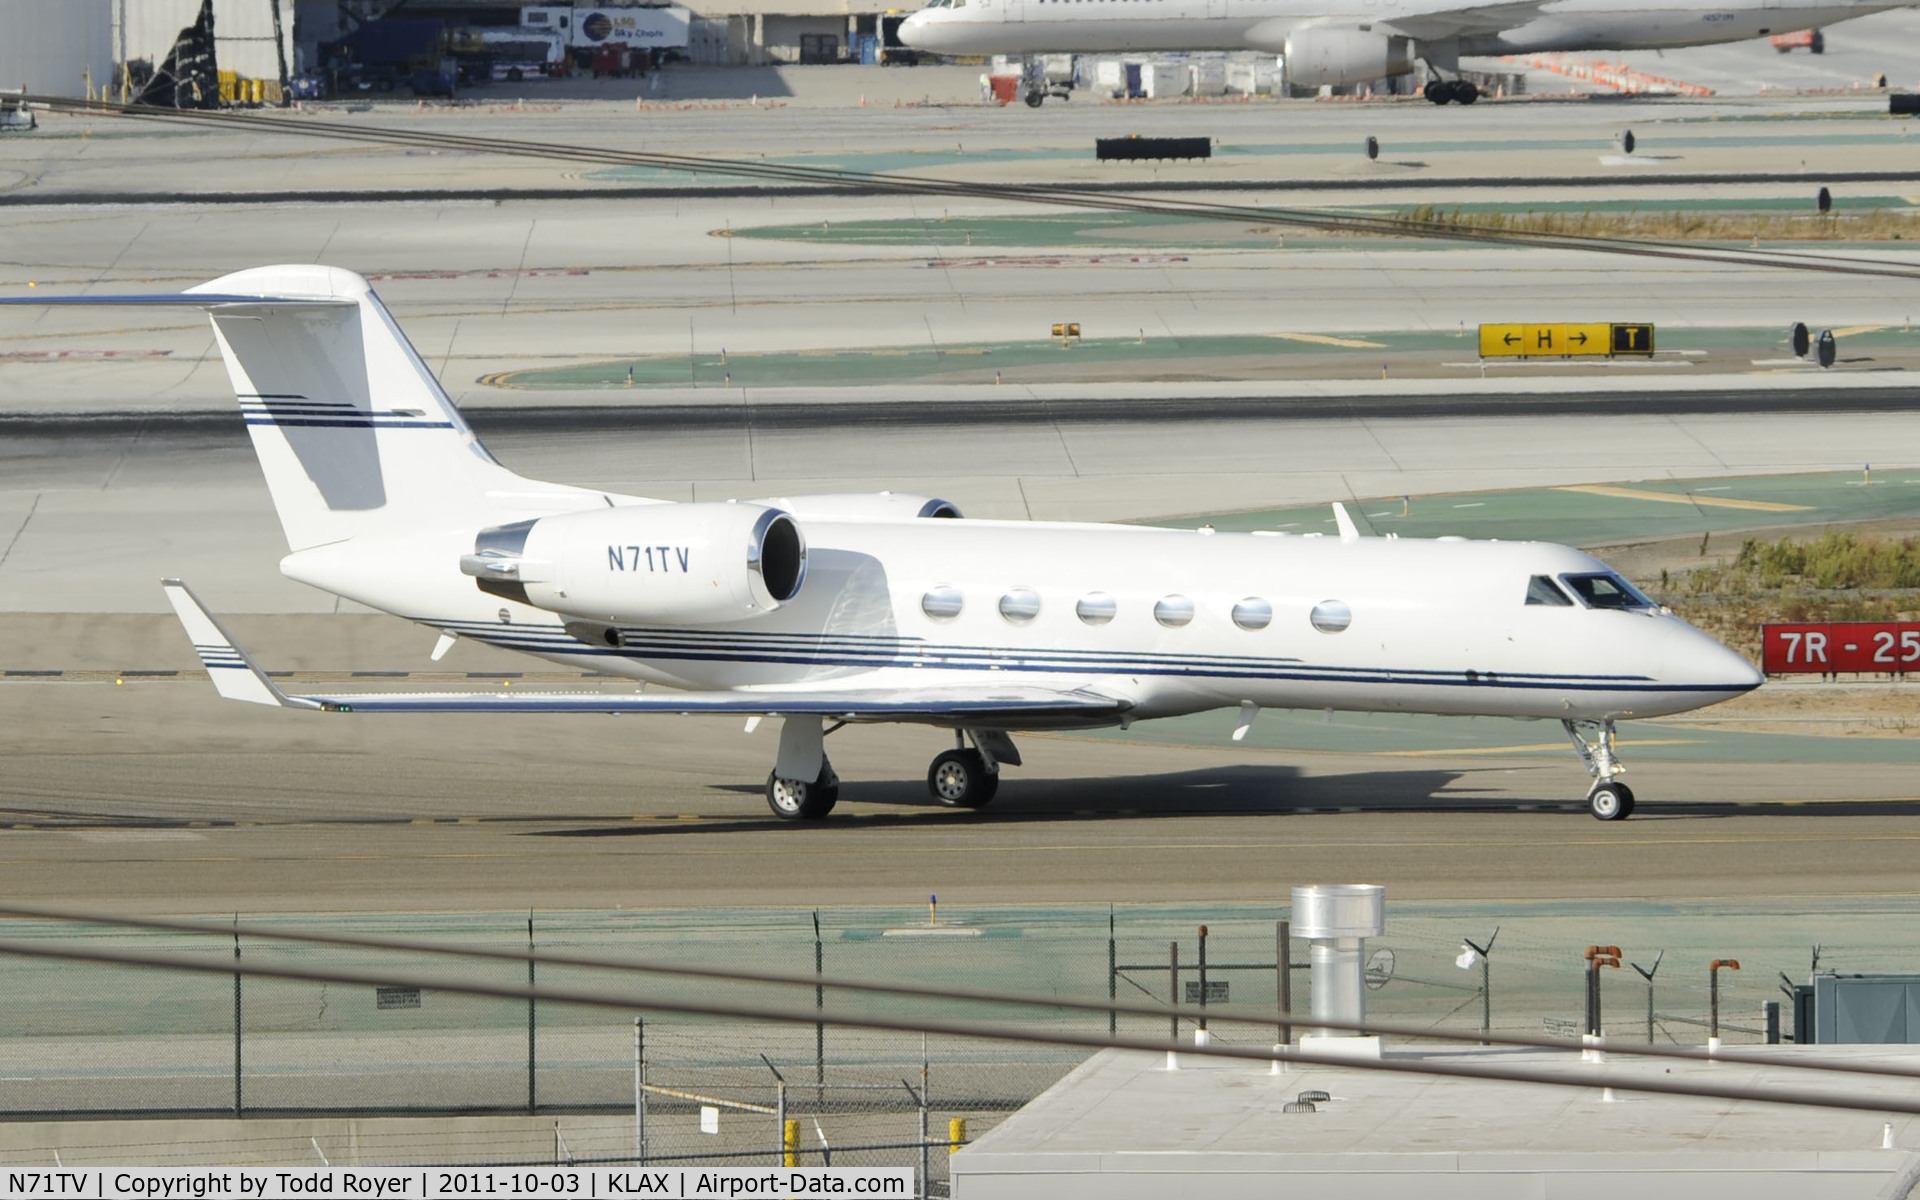 N71TV, 2000 Gulfstream Aerospace G-IV C/N 1430, Taxiing at LAX